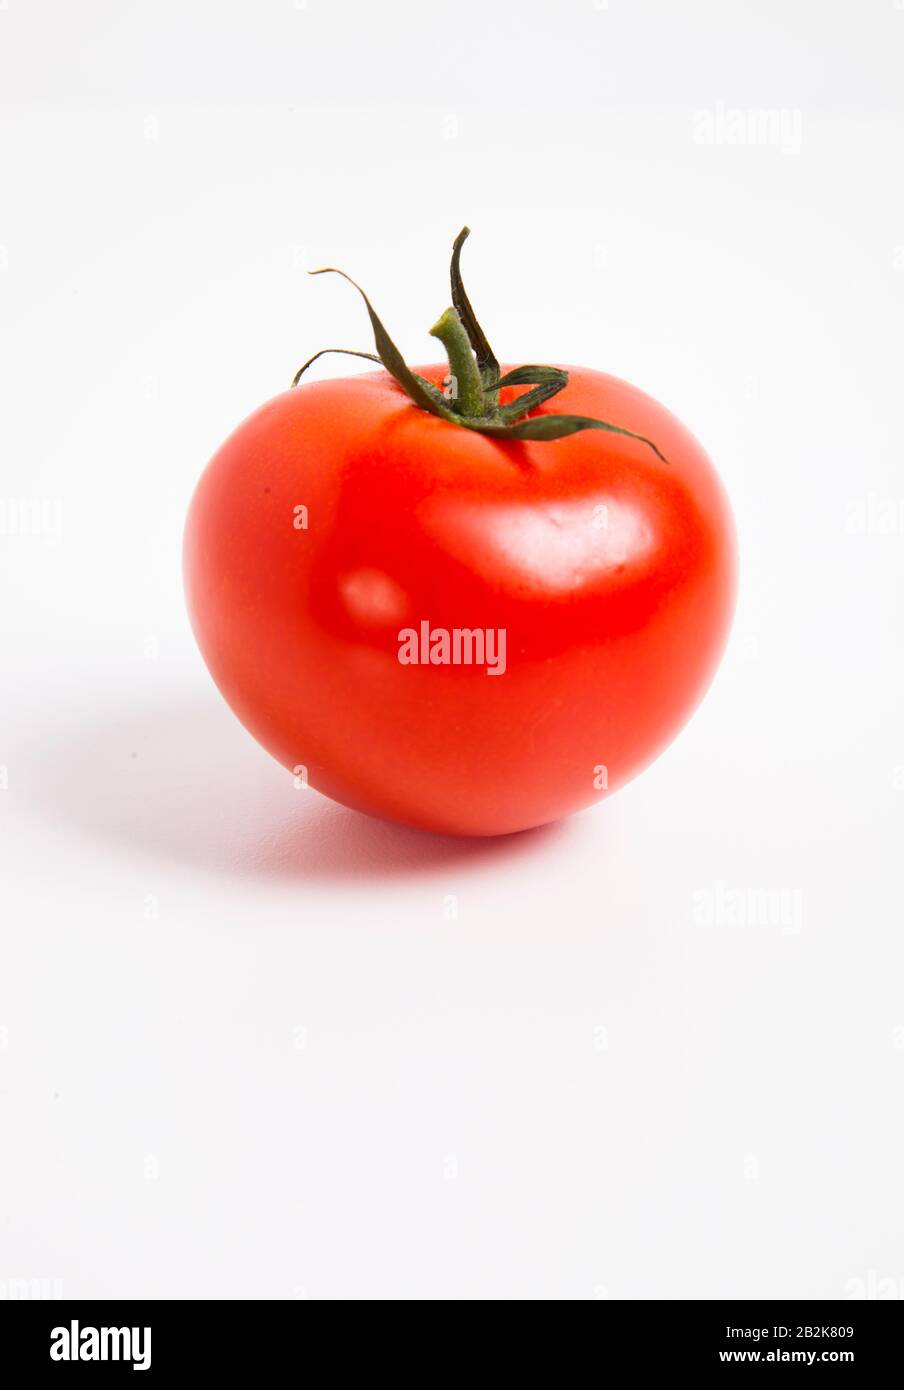 Close-up of tomato over white background Stock Photo